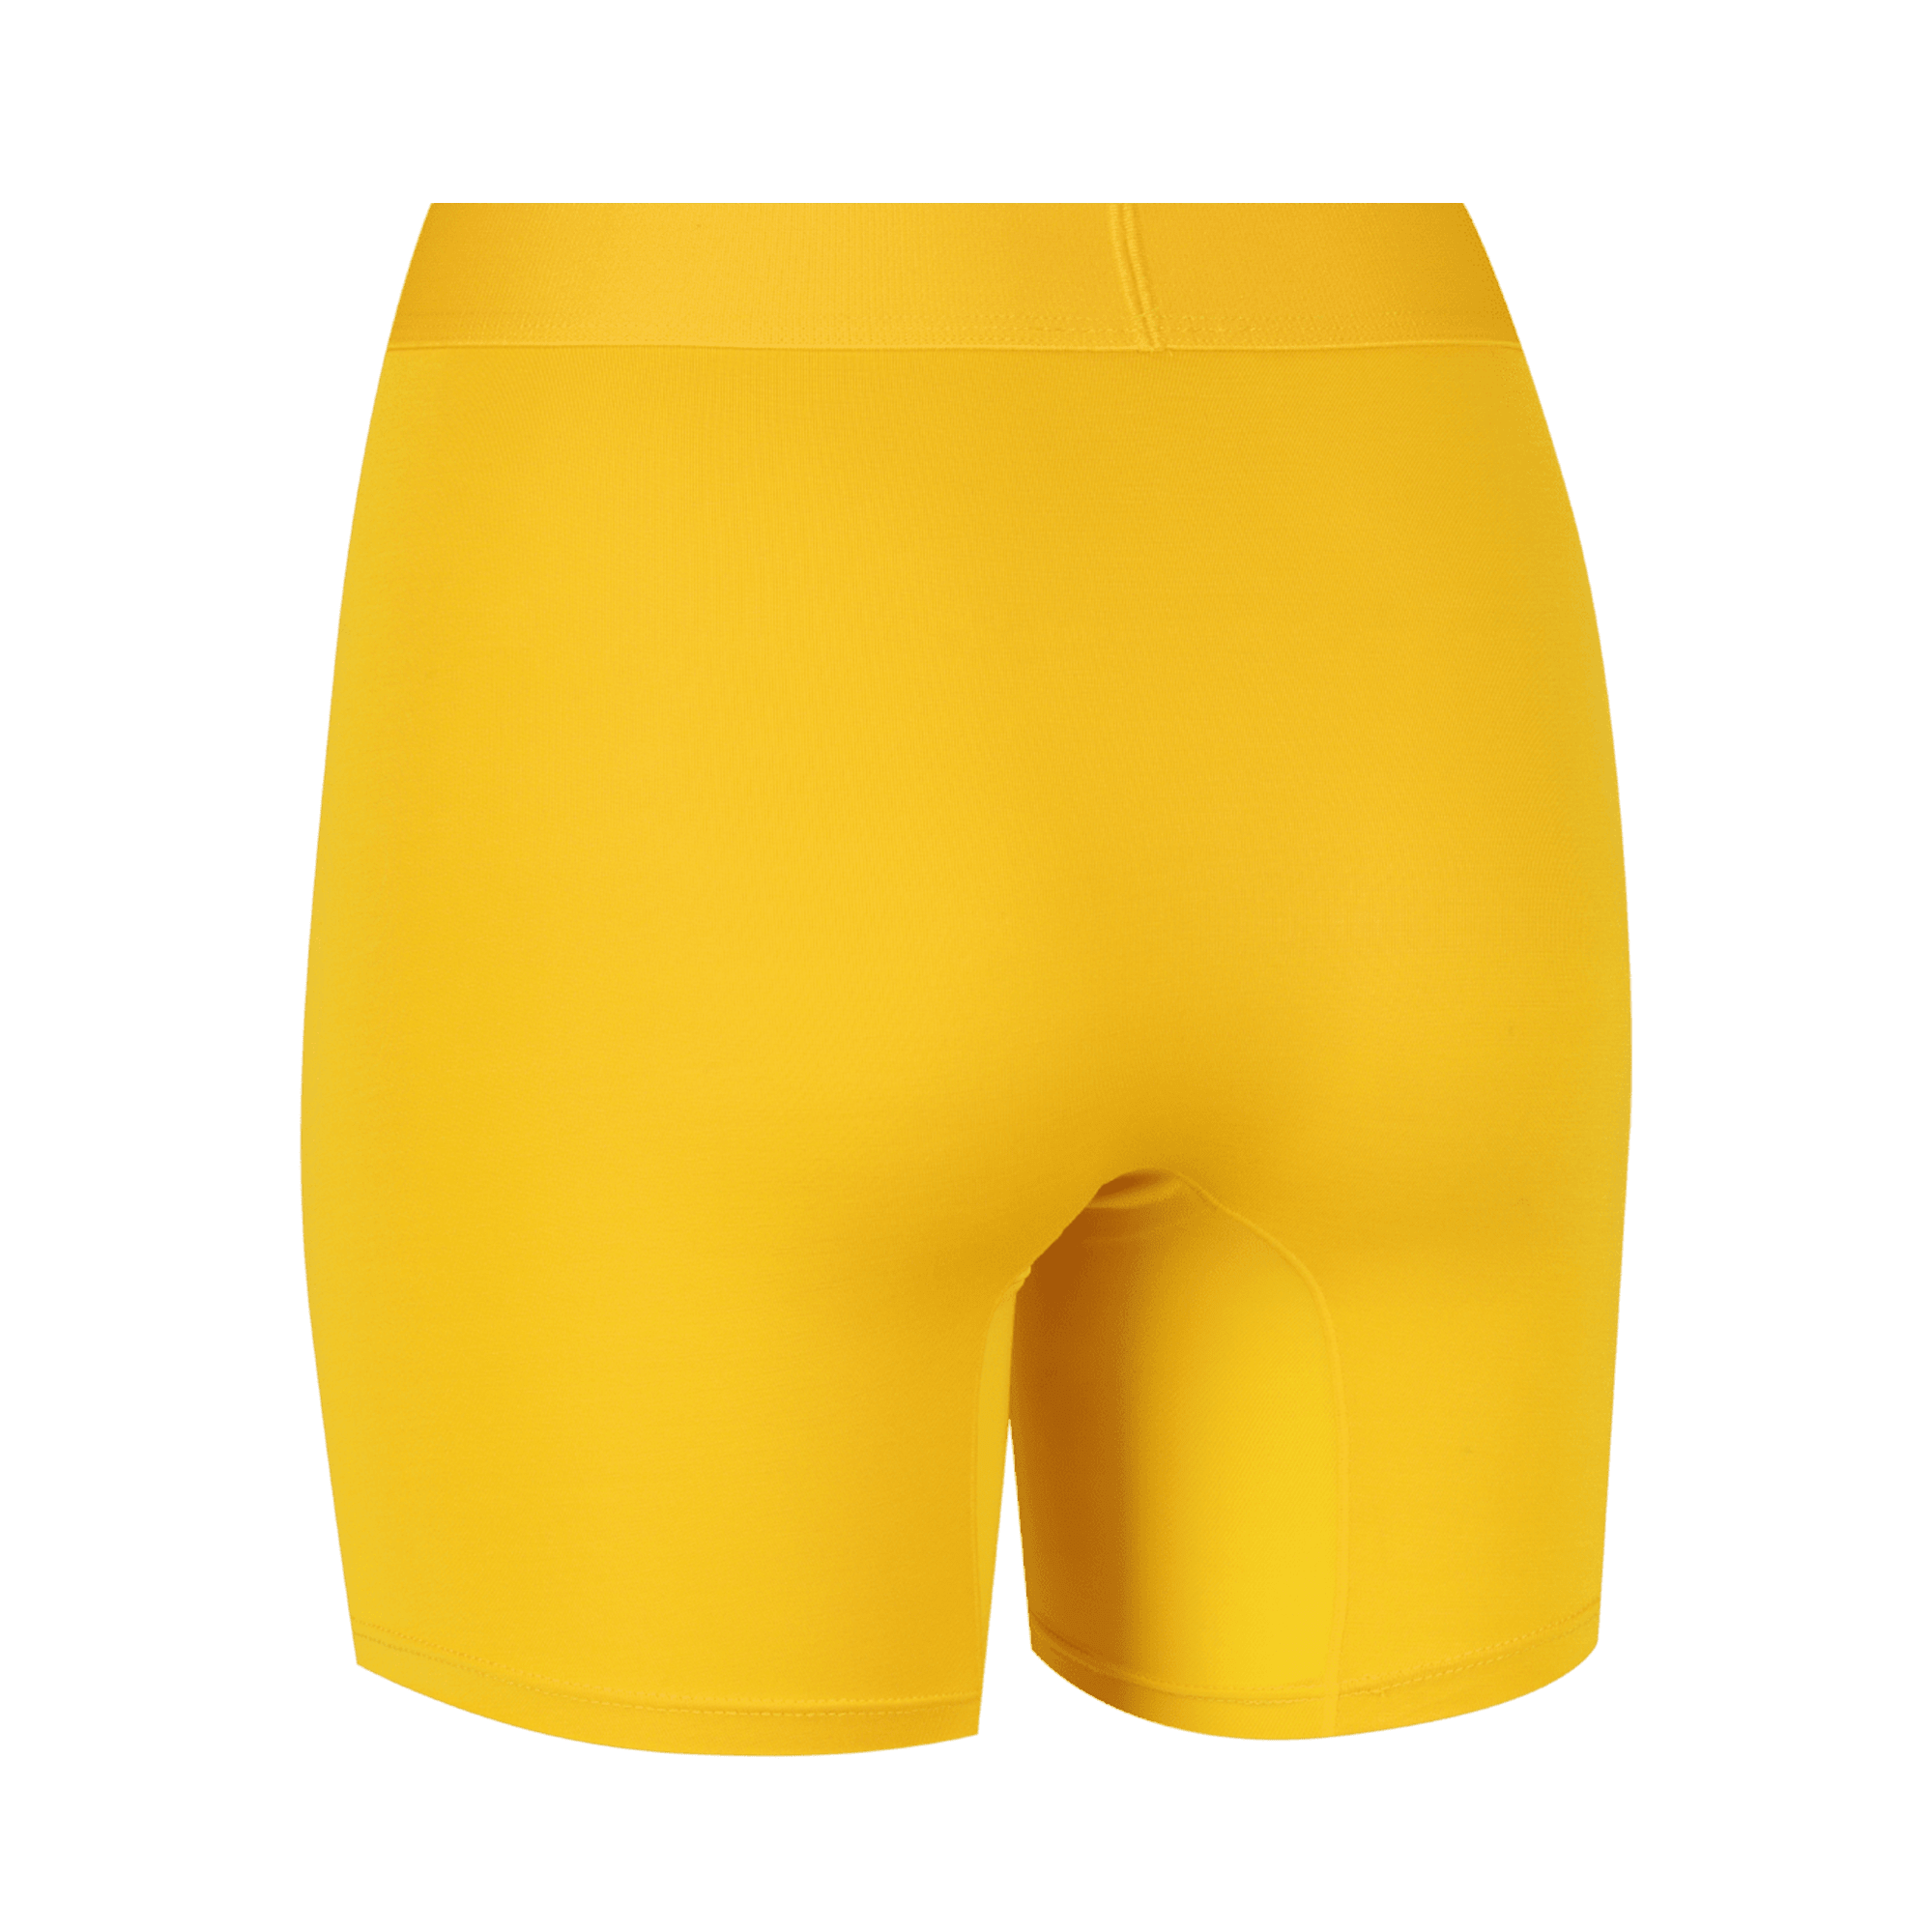 Women's Body Shorts - Cheeky Cheddars